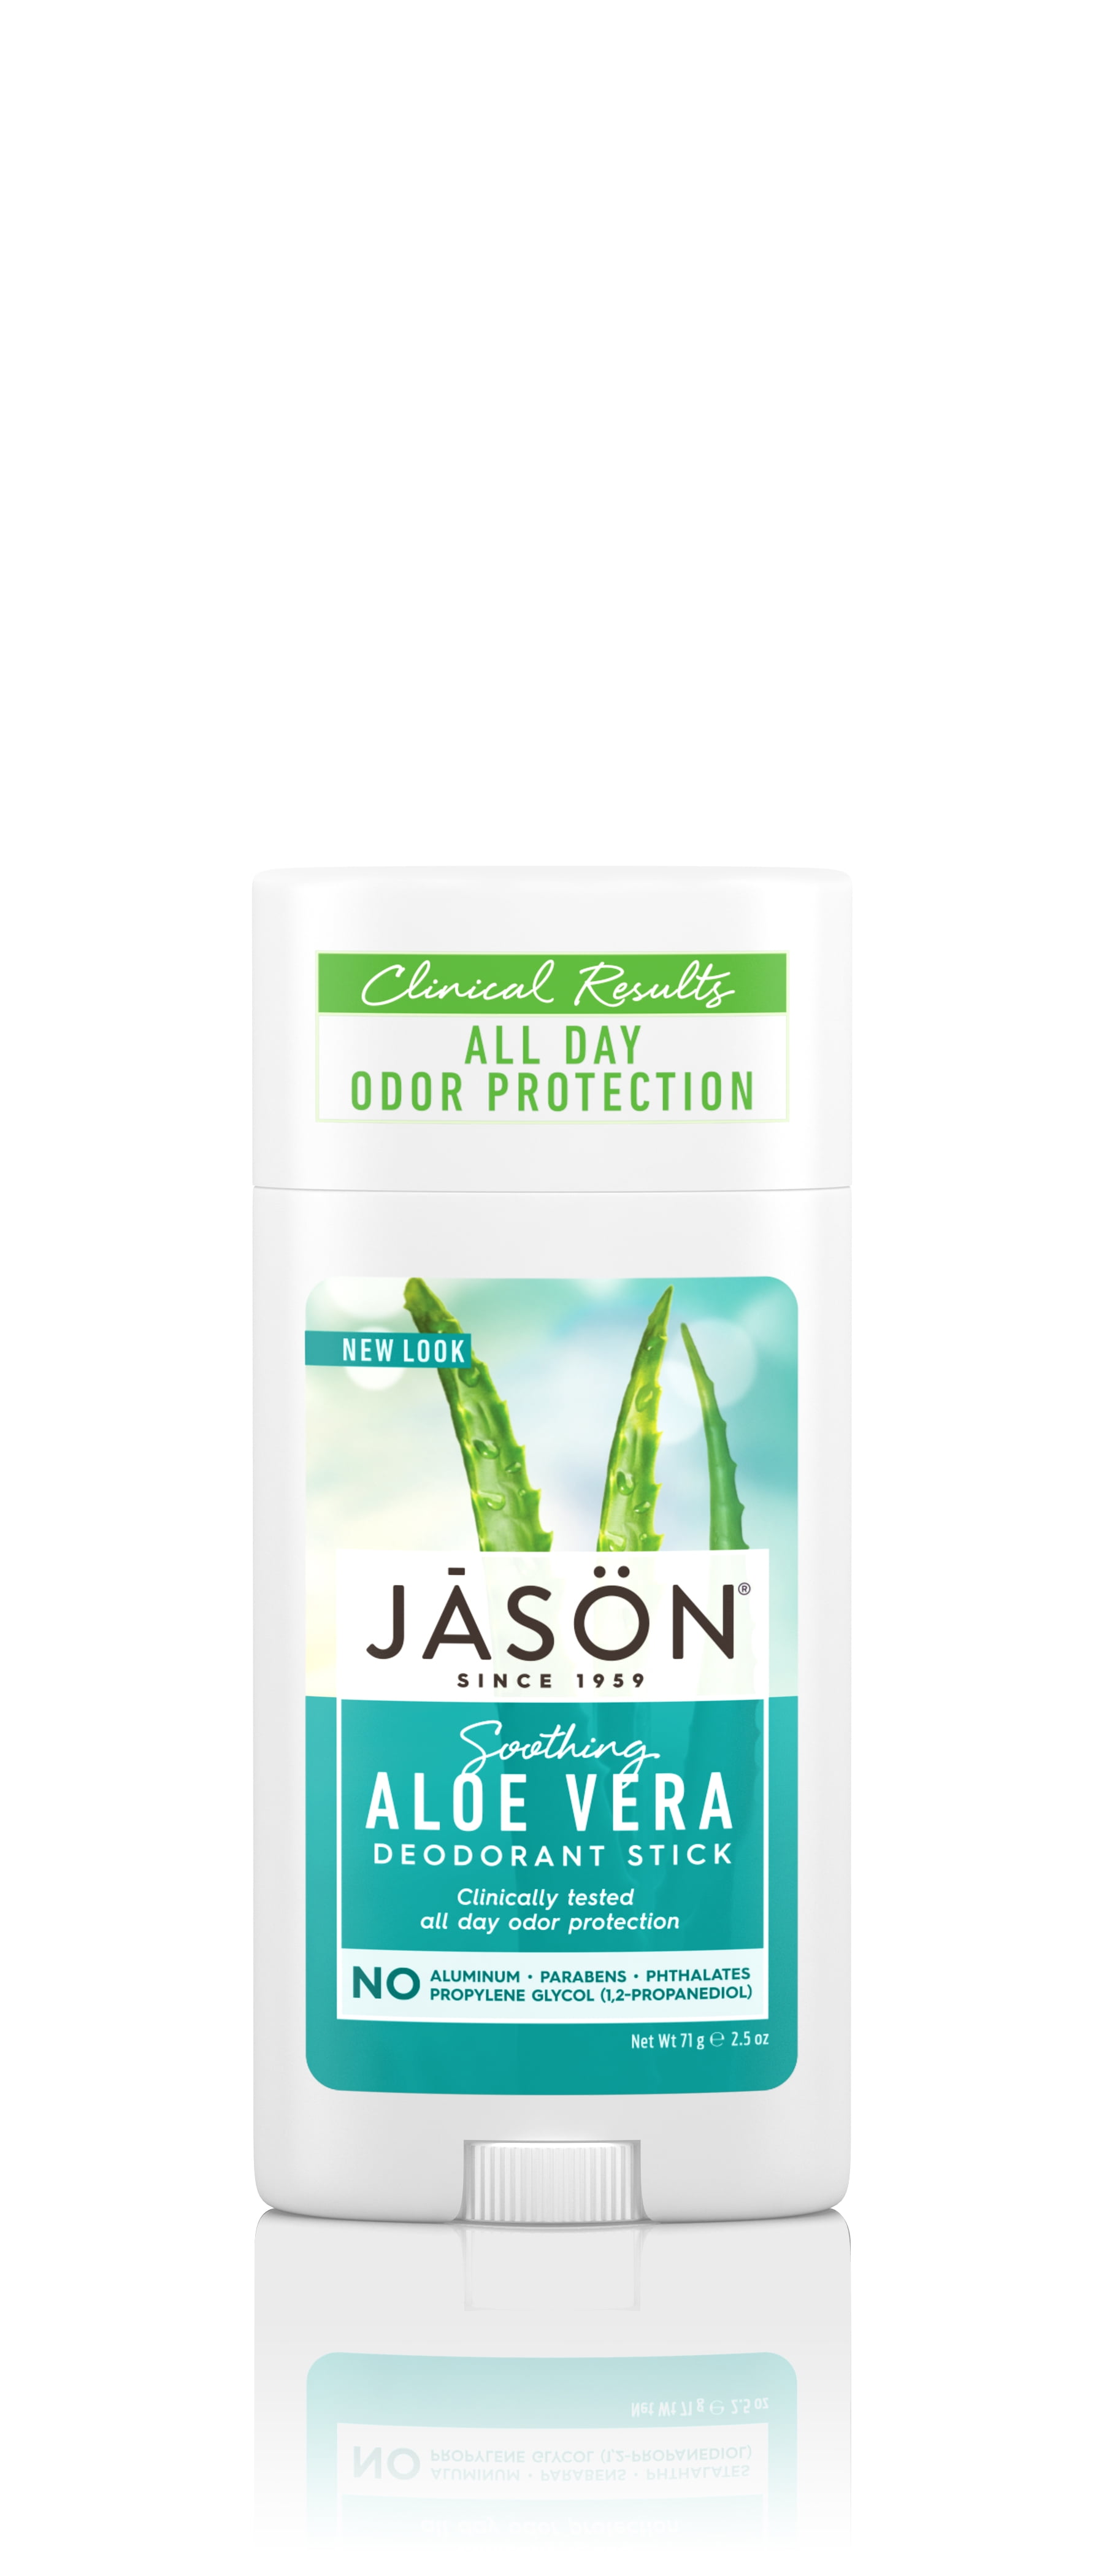 Sinewi Invitere Forudsige JASON Soothing Aloe Vera Deodorant, 2.5 Ounce Stick - Walmart.com